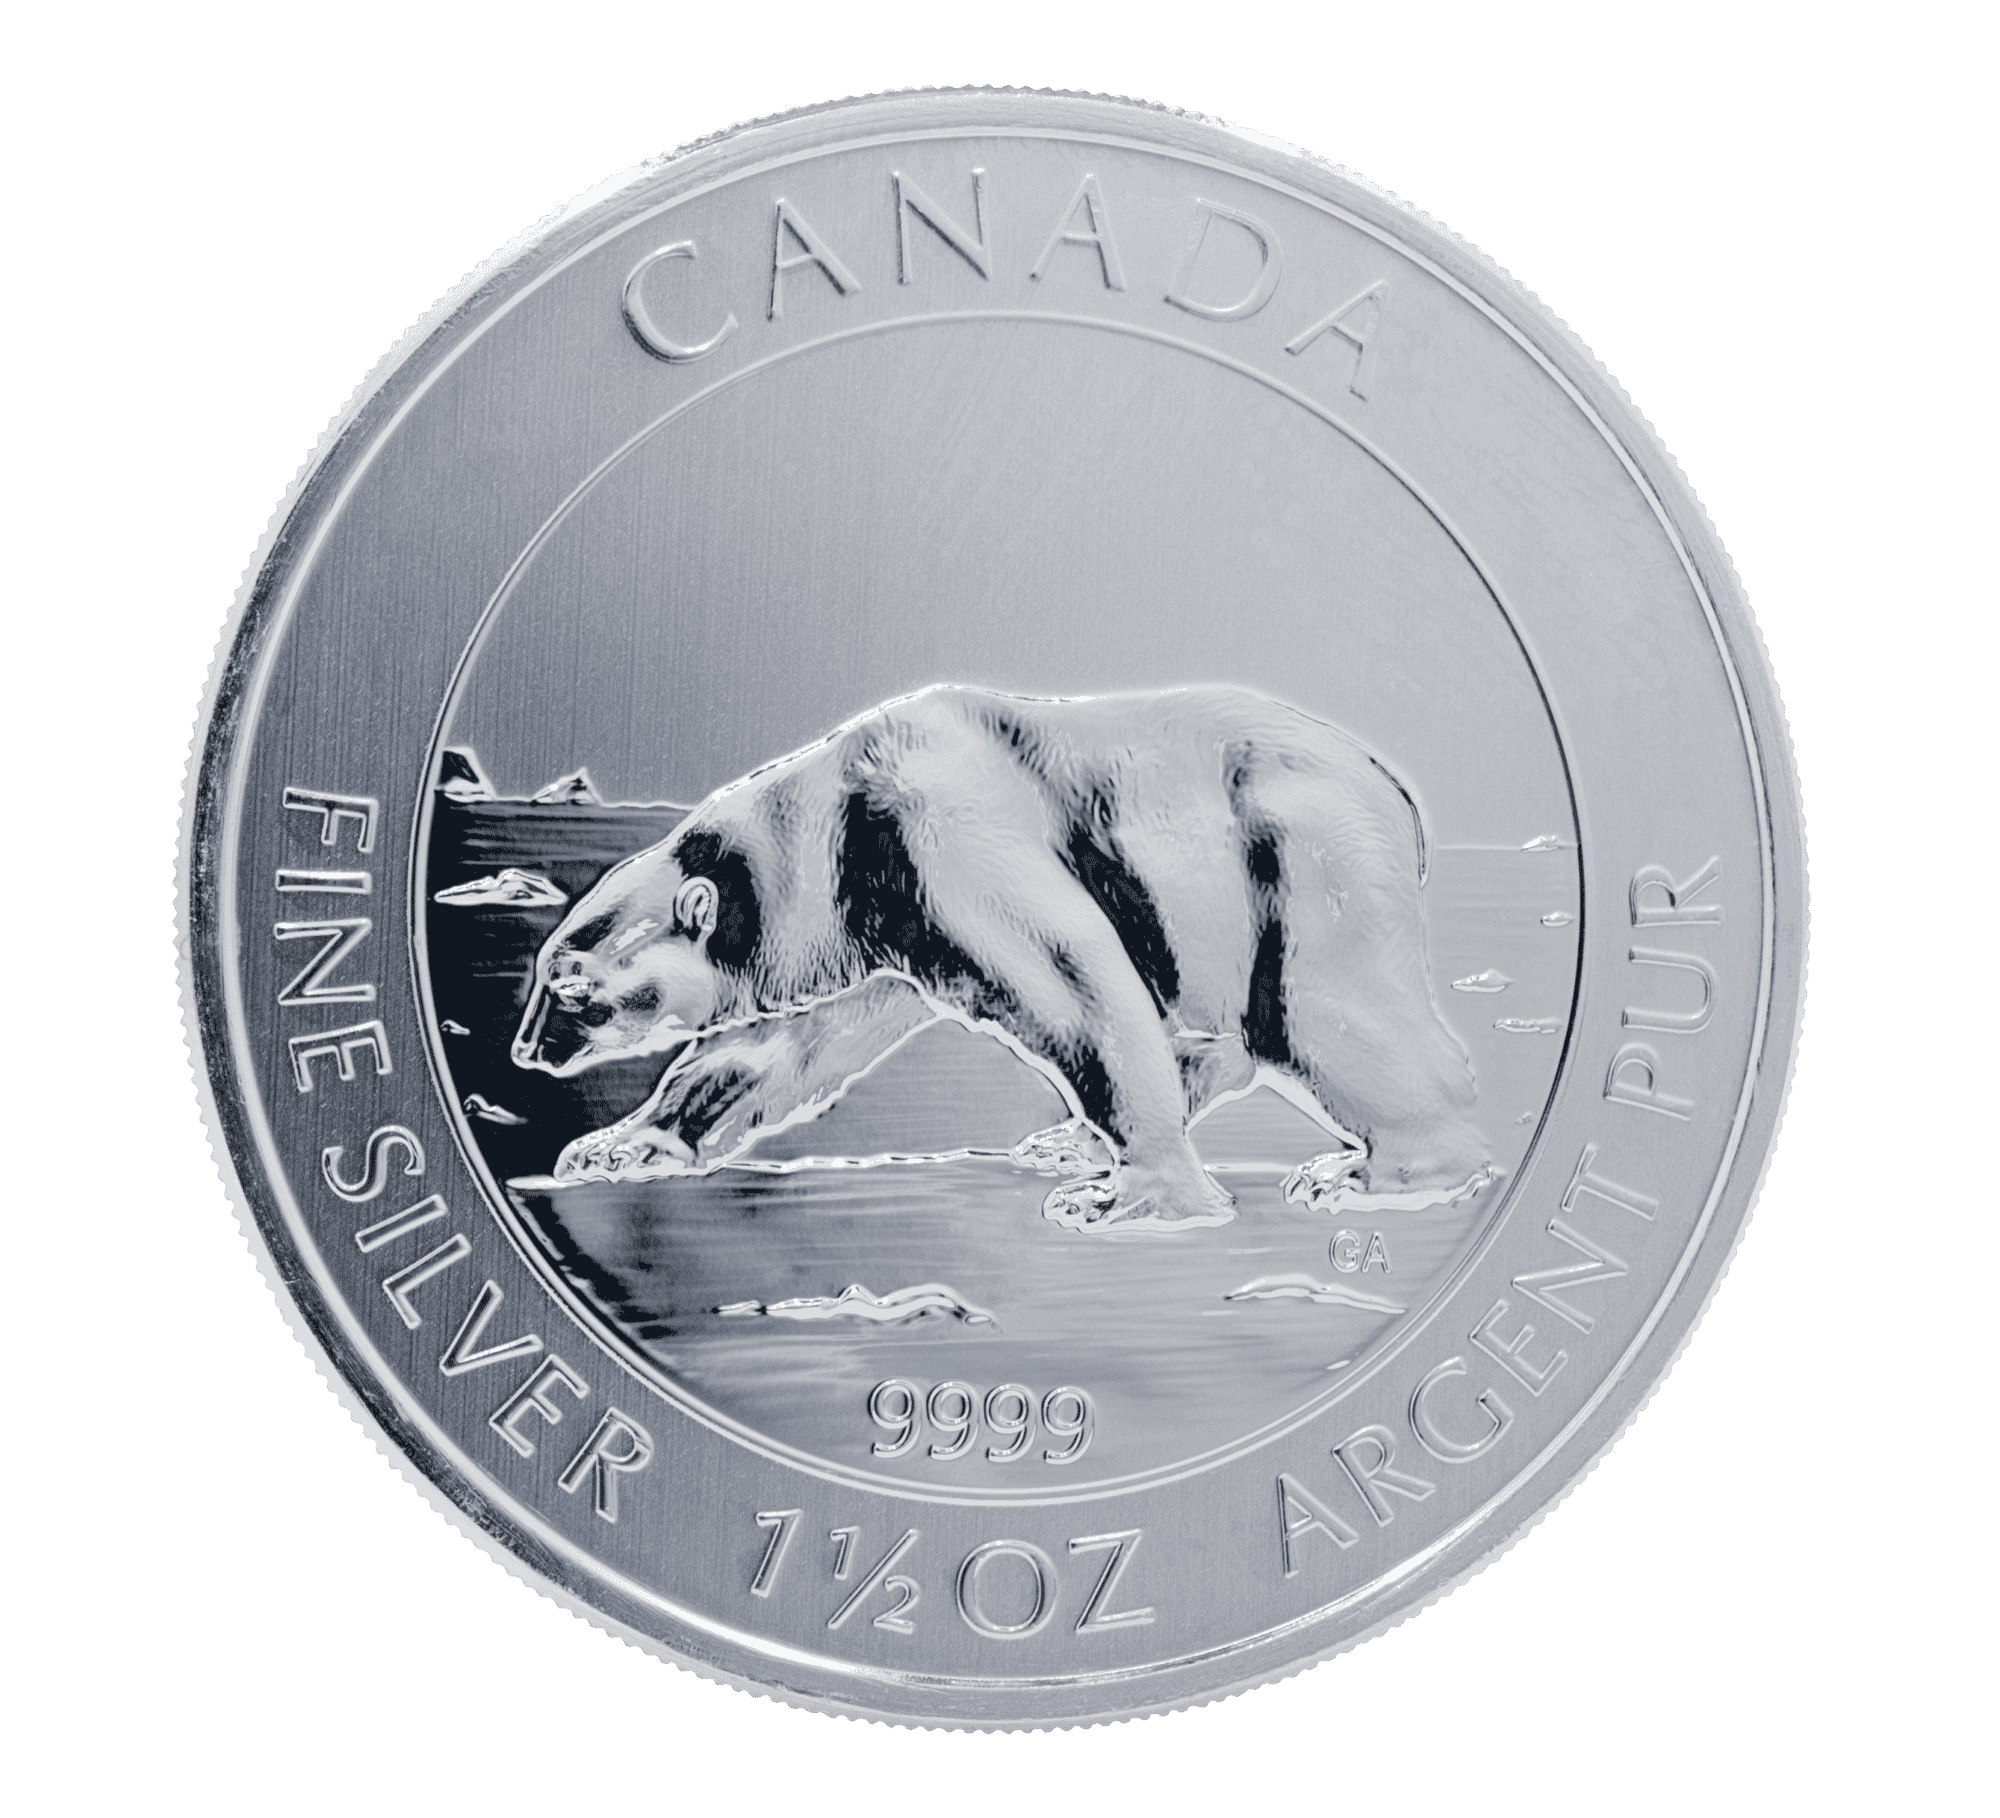 Polar Bear Details about   RCM - Original Sealed NBU Proof Like One Coin $2 2005 